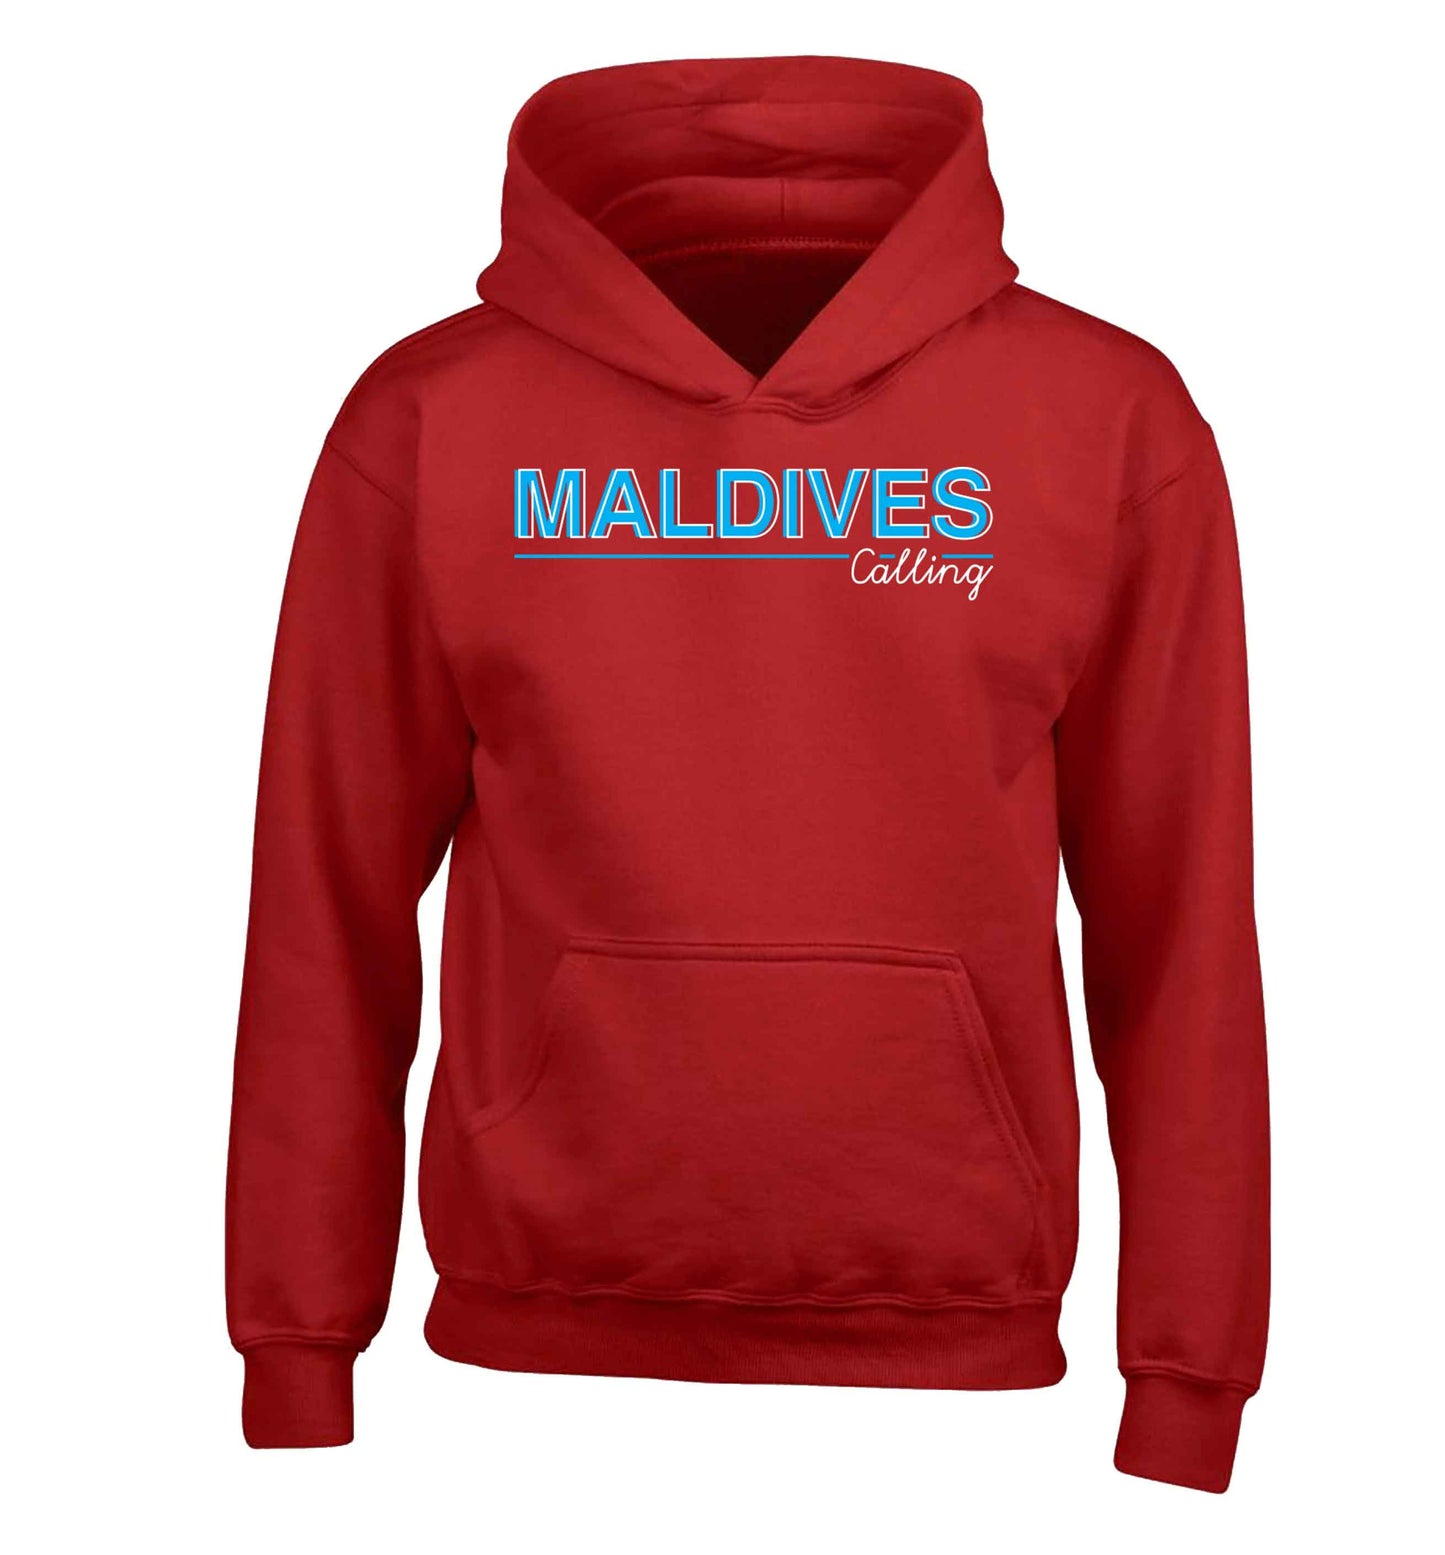 Maldives calling children's red hoodie 12-13 Years